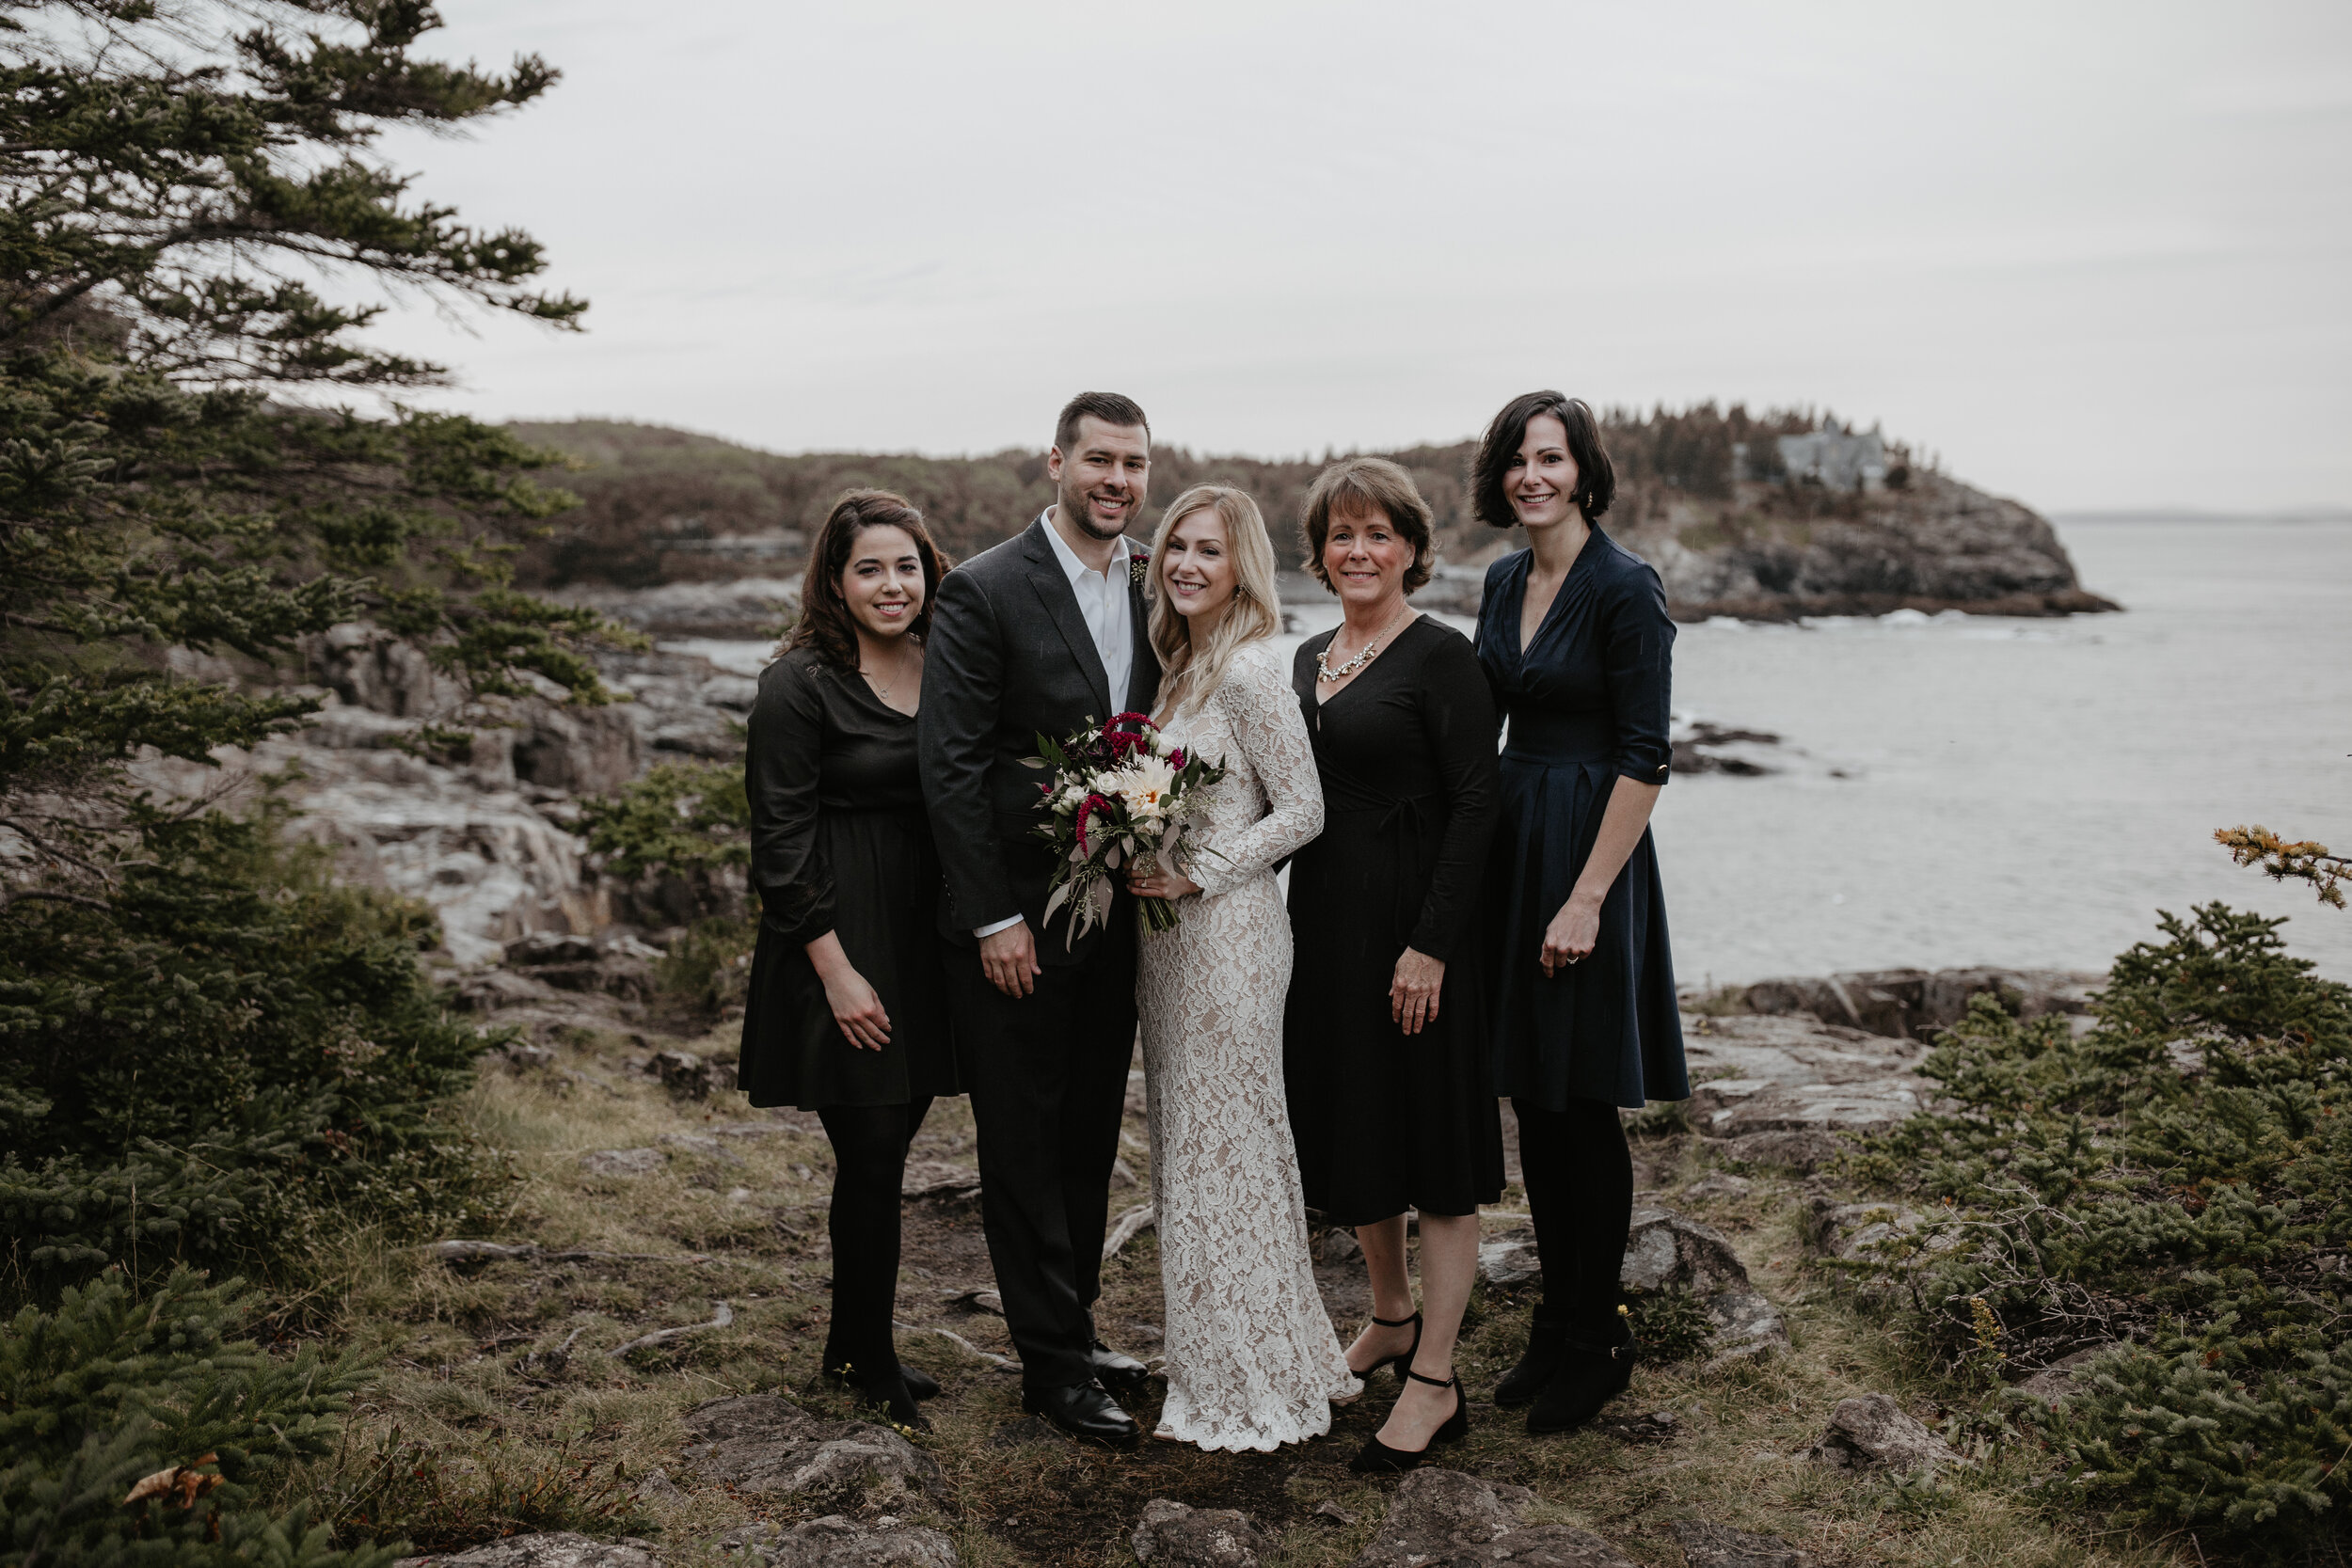 Nicole-Daacke-Photography-Acadia-national-park-elopement-photography-elopement-in-acadia-inspiration-maine-intimate-wedding-destination-elopement-photographer-rainy-day-maine-coast-bar-harbor-elopement-photography-134.jpg